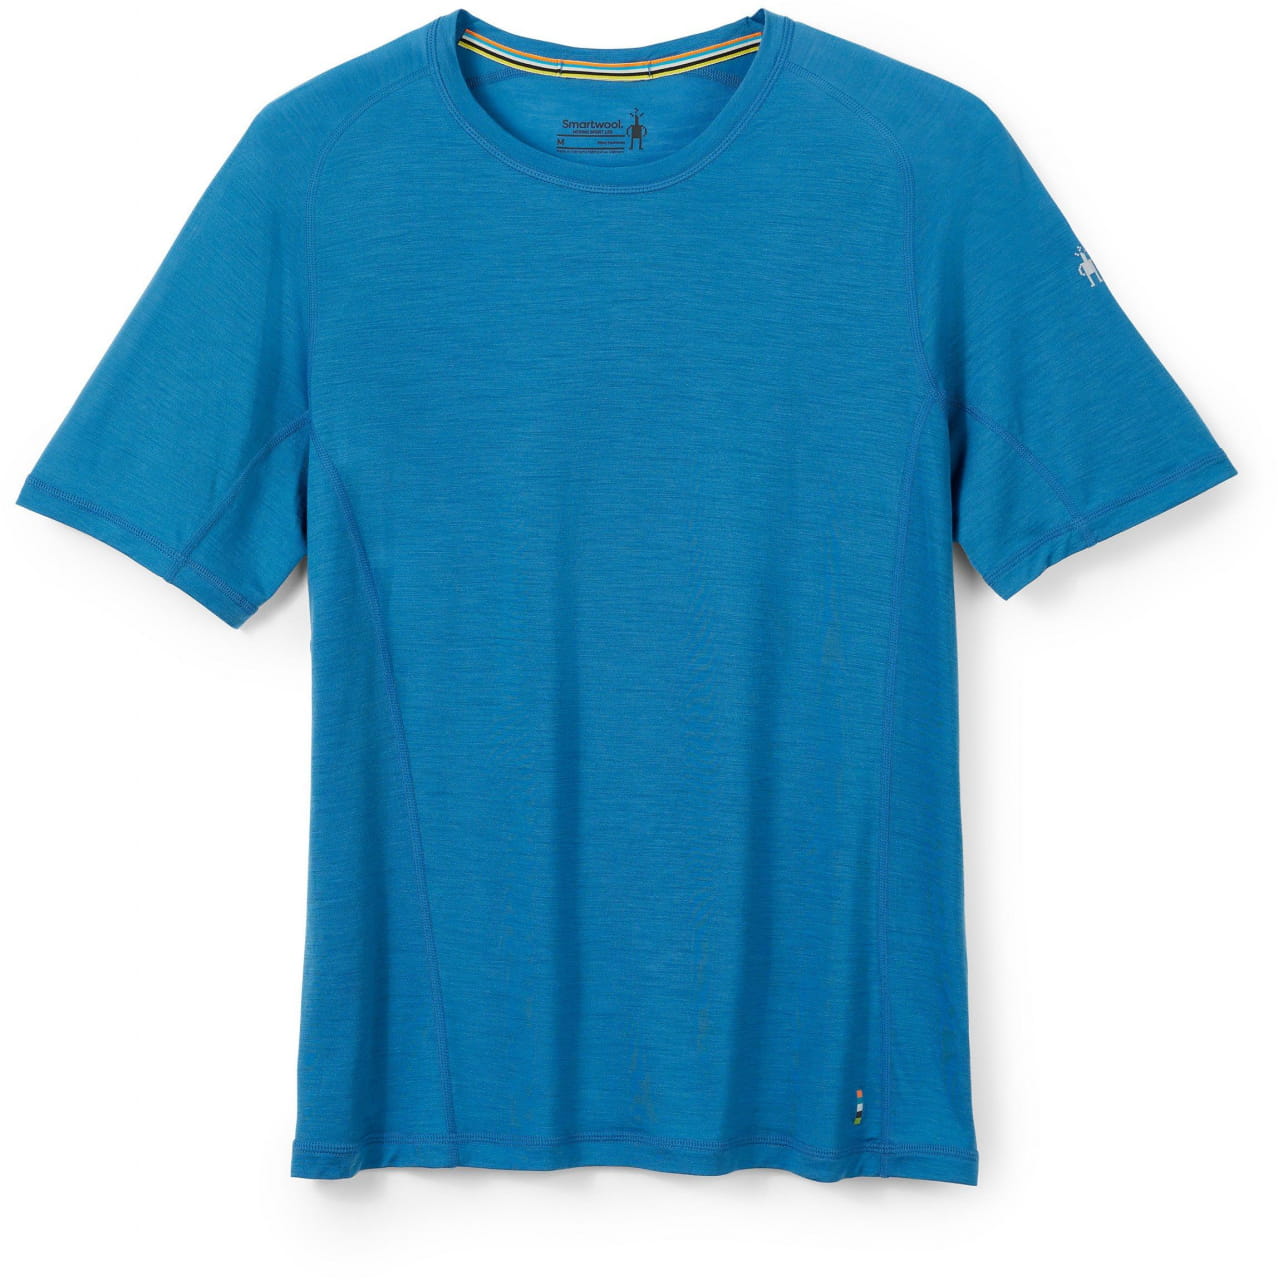 Langarm-T-Shirt für Männer Smartwool Merino Sport 120 Short Sleeve